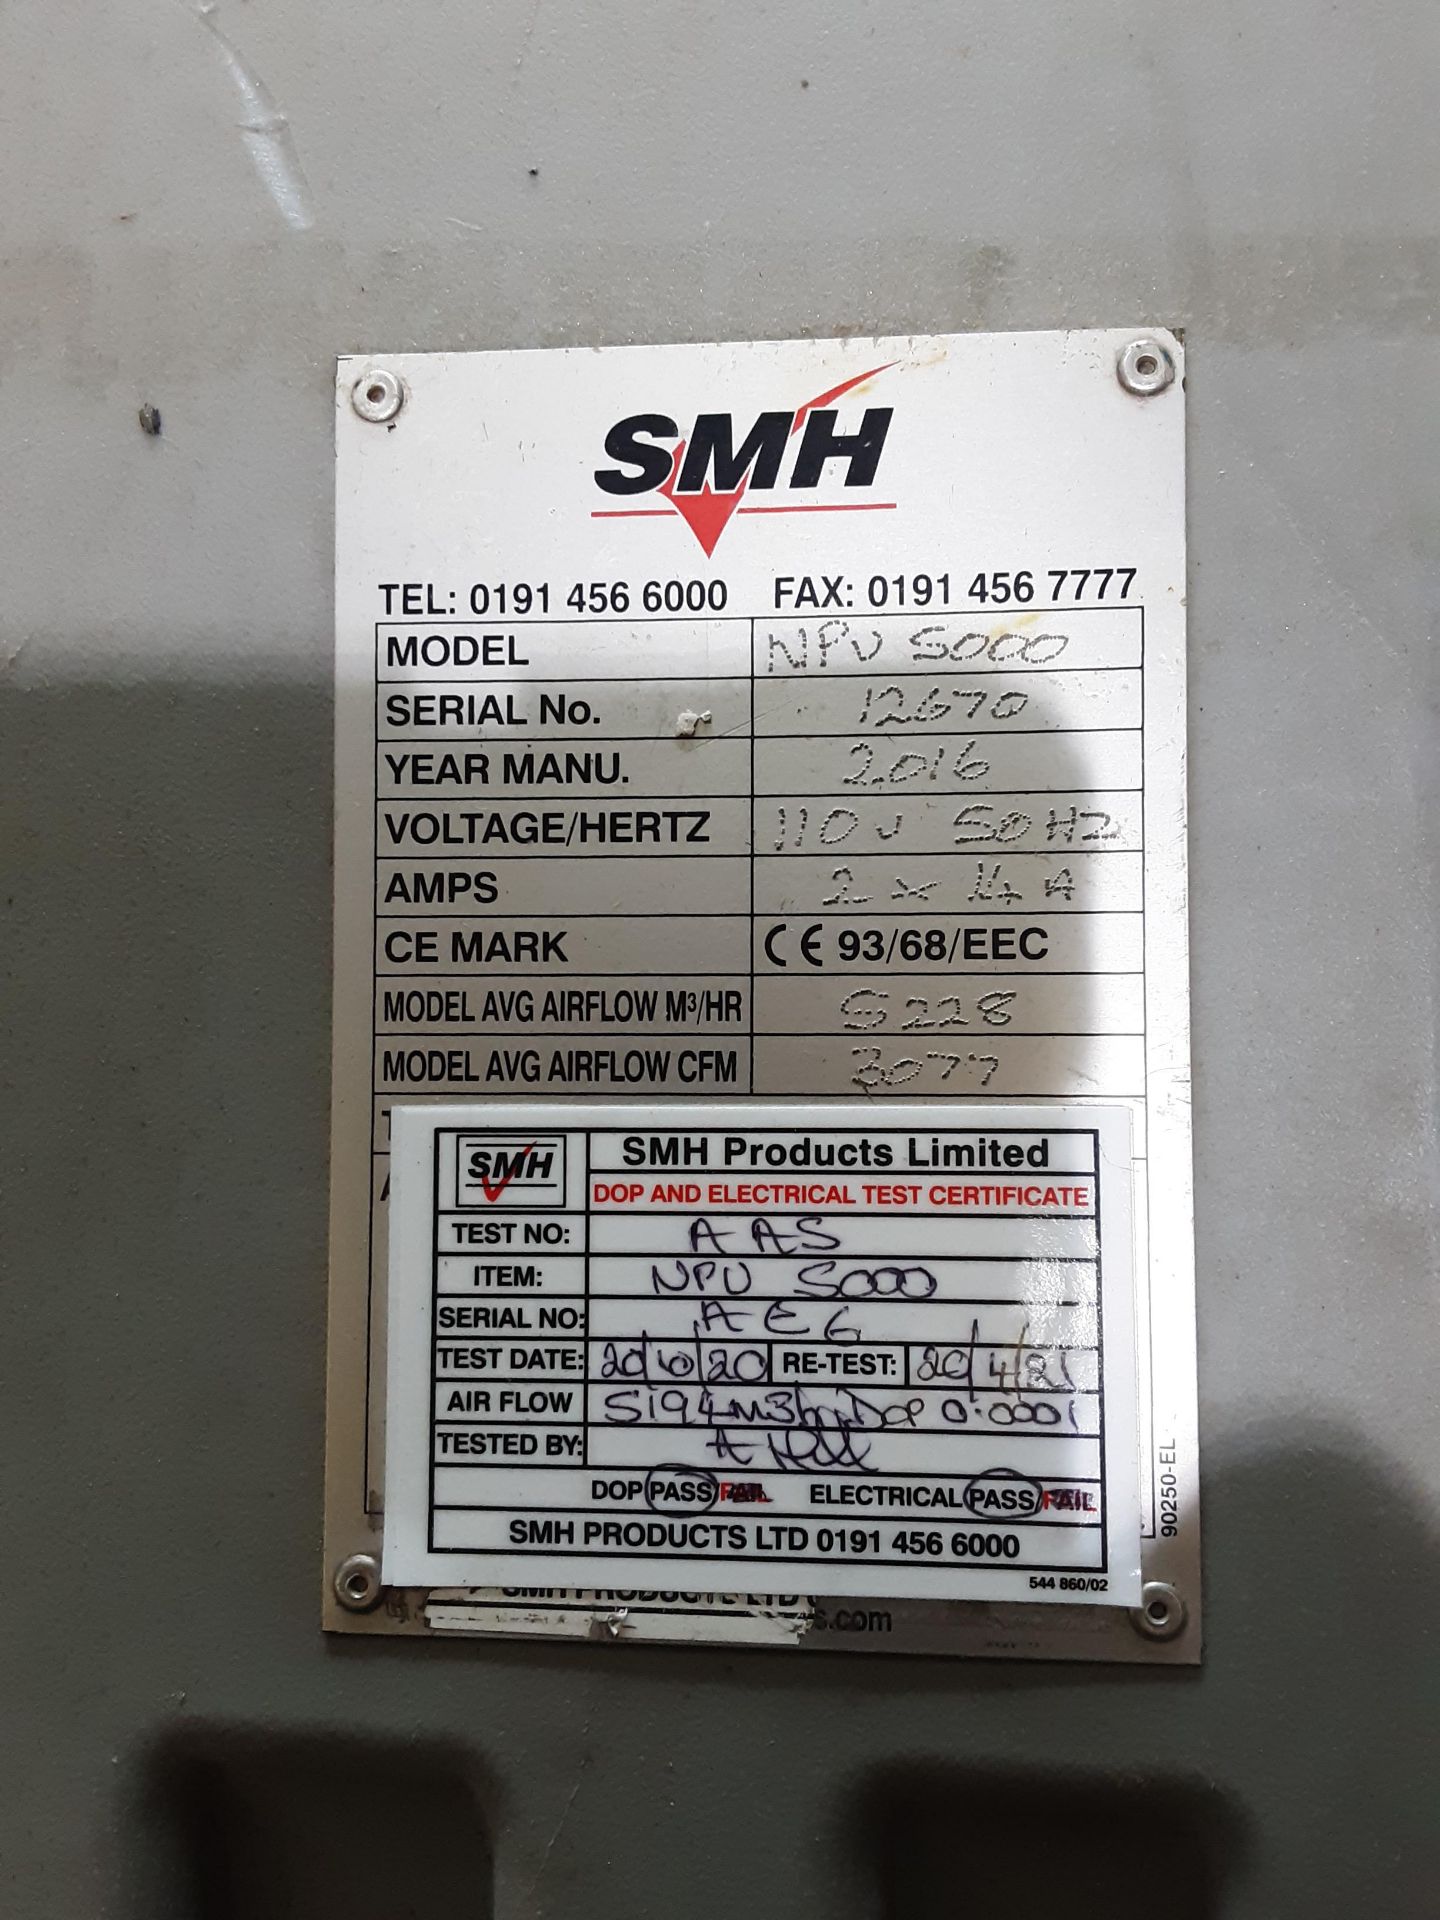 SMH NPU 5000 Extractor/Filter Unit 110V, Serial No. 12670, (2016) - Image 6 of 6